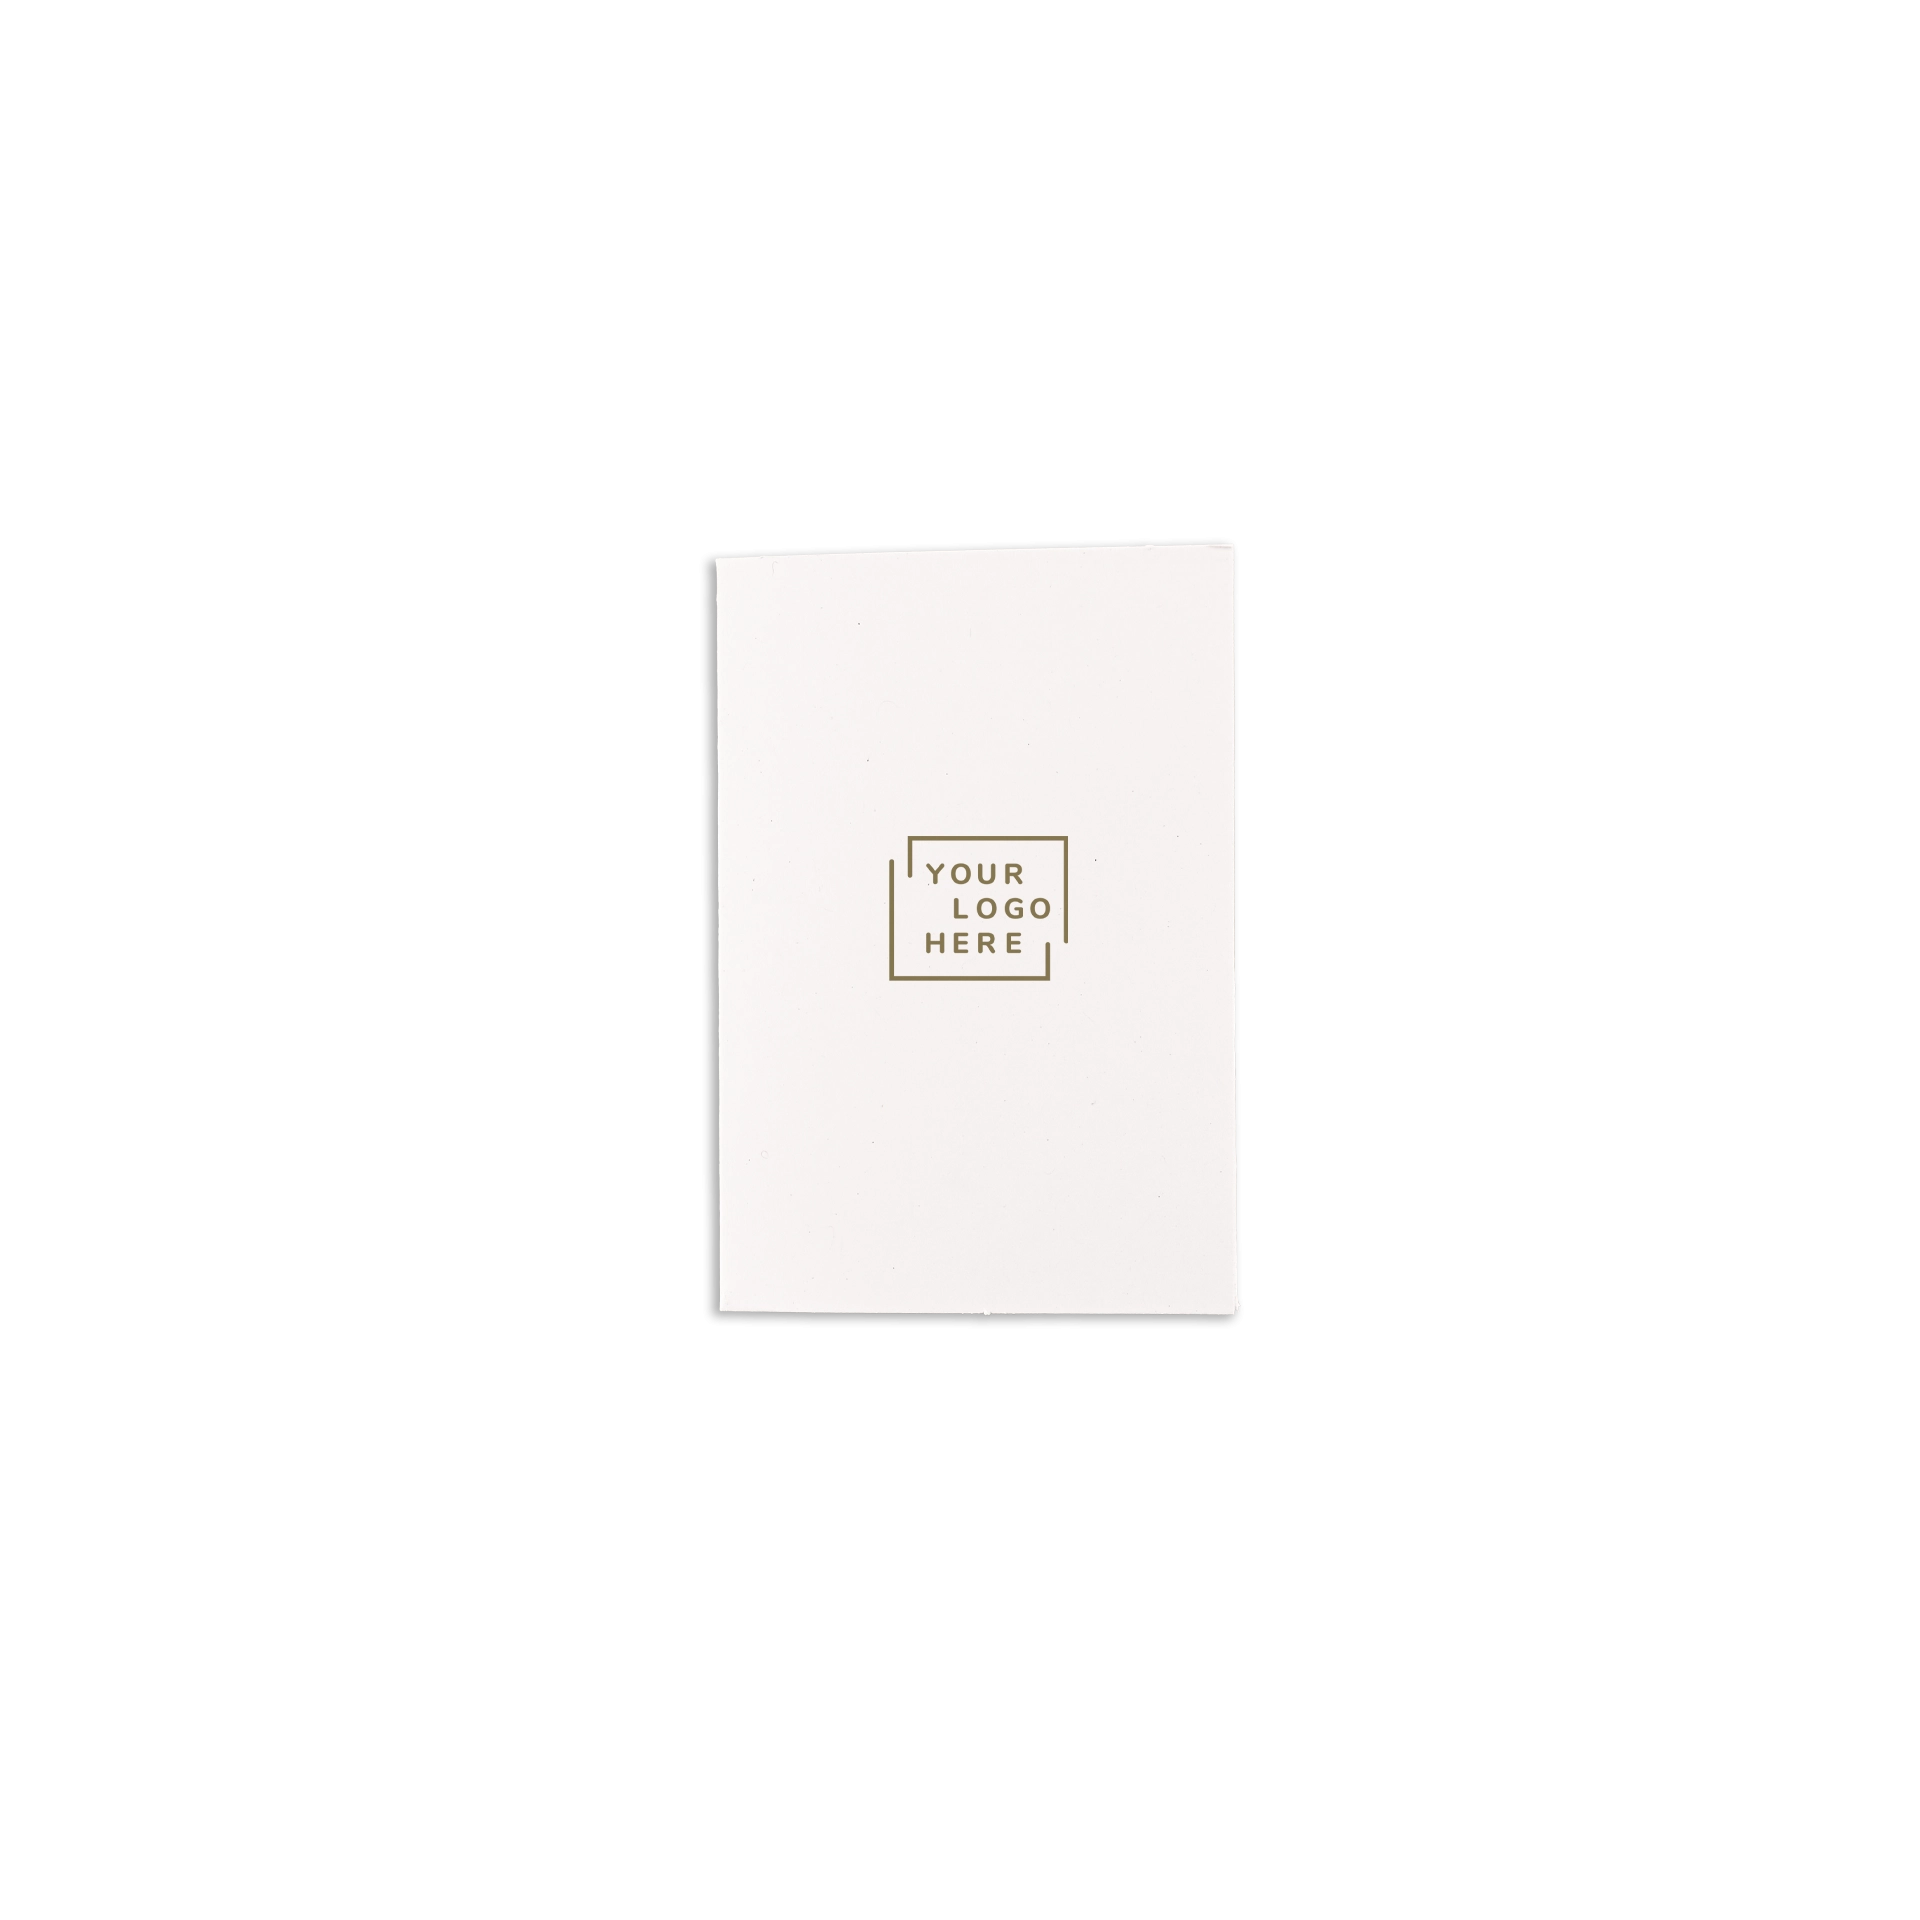 Astuccio keycard D3 7,5x10 cm carta Freelife stampa 4/4 colore stampa digitale